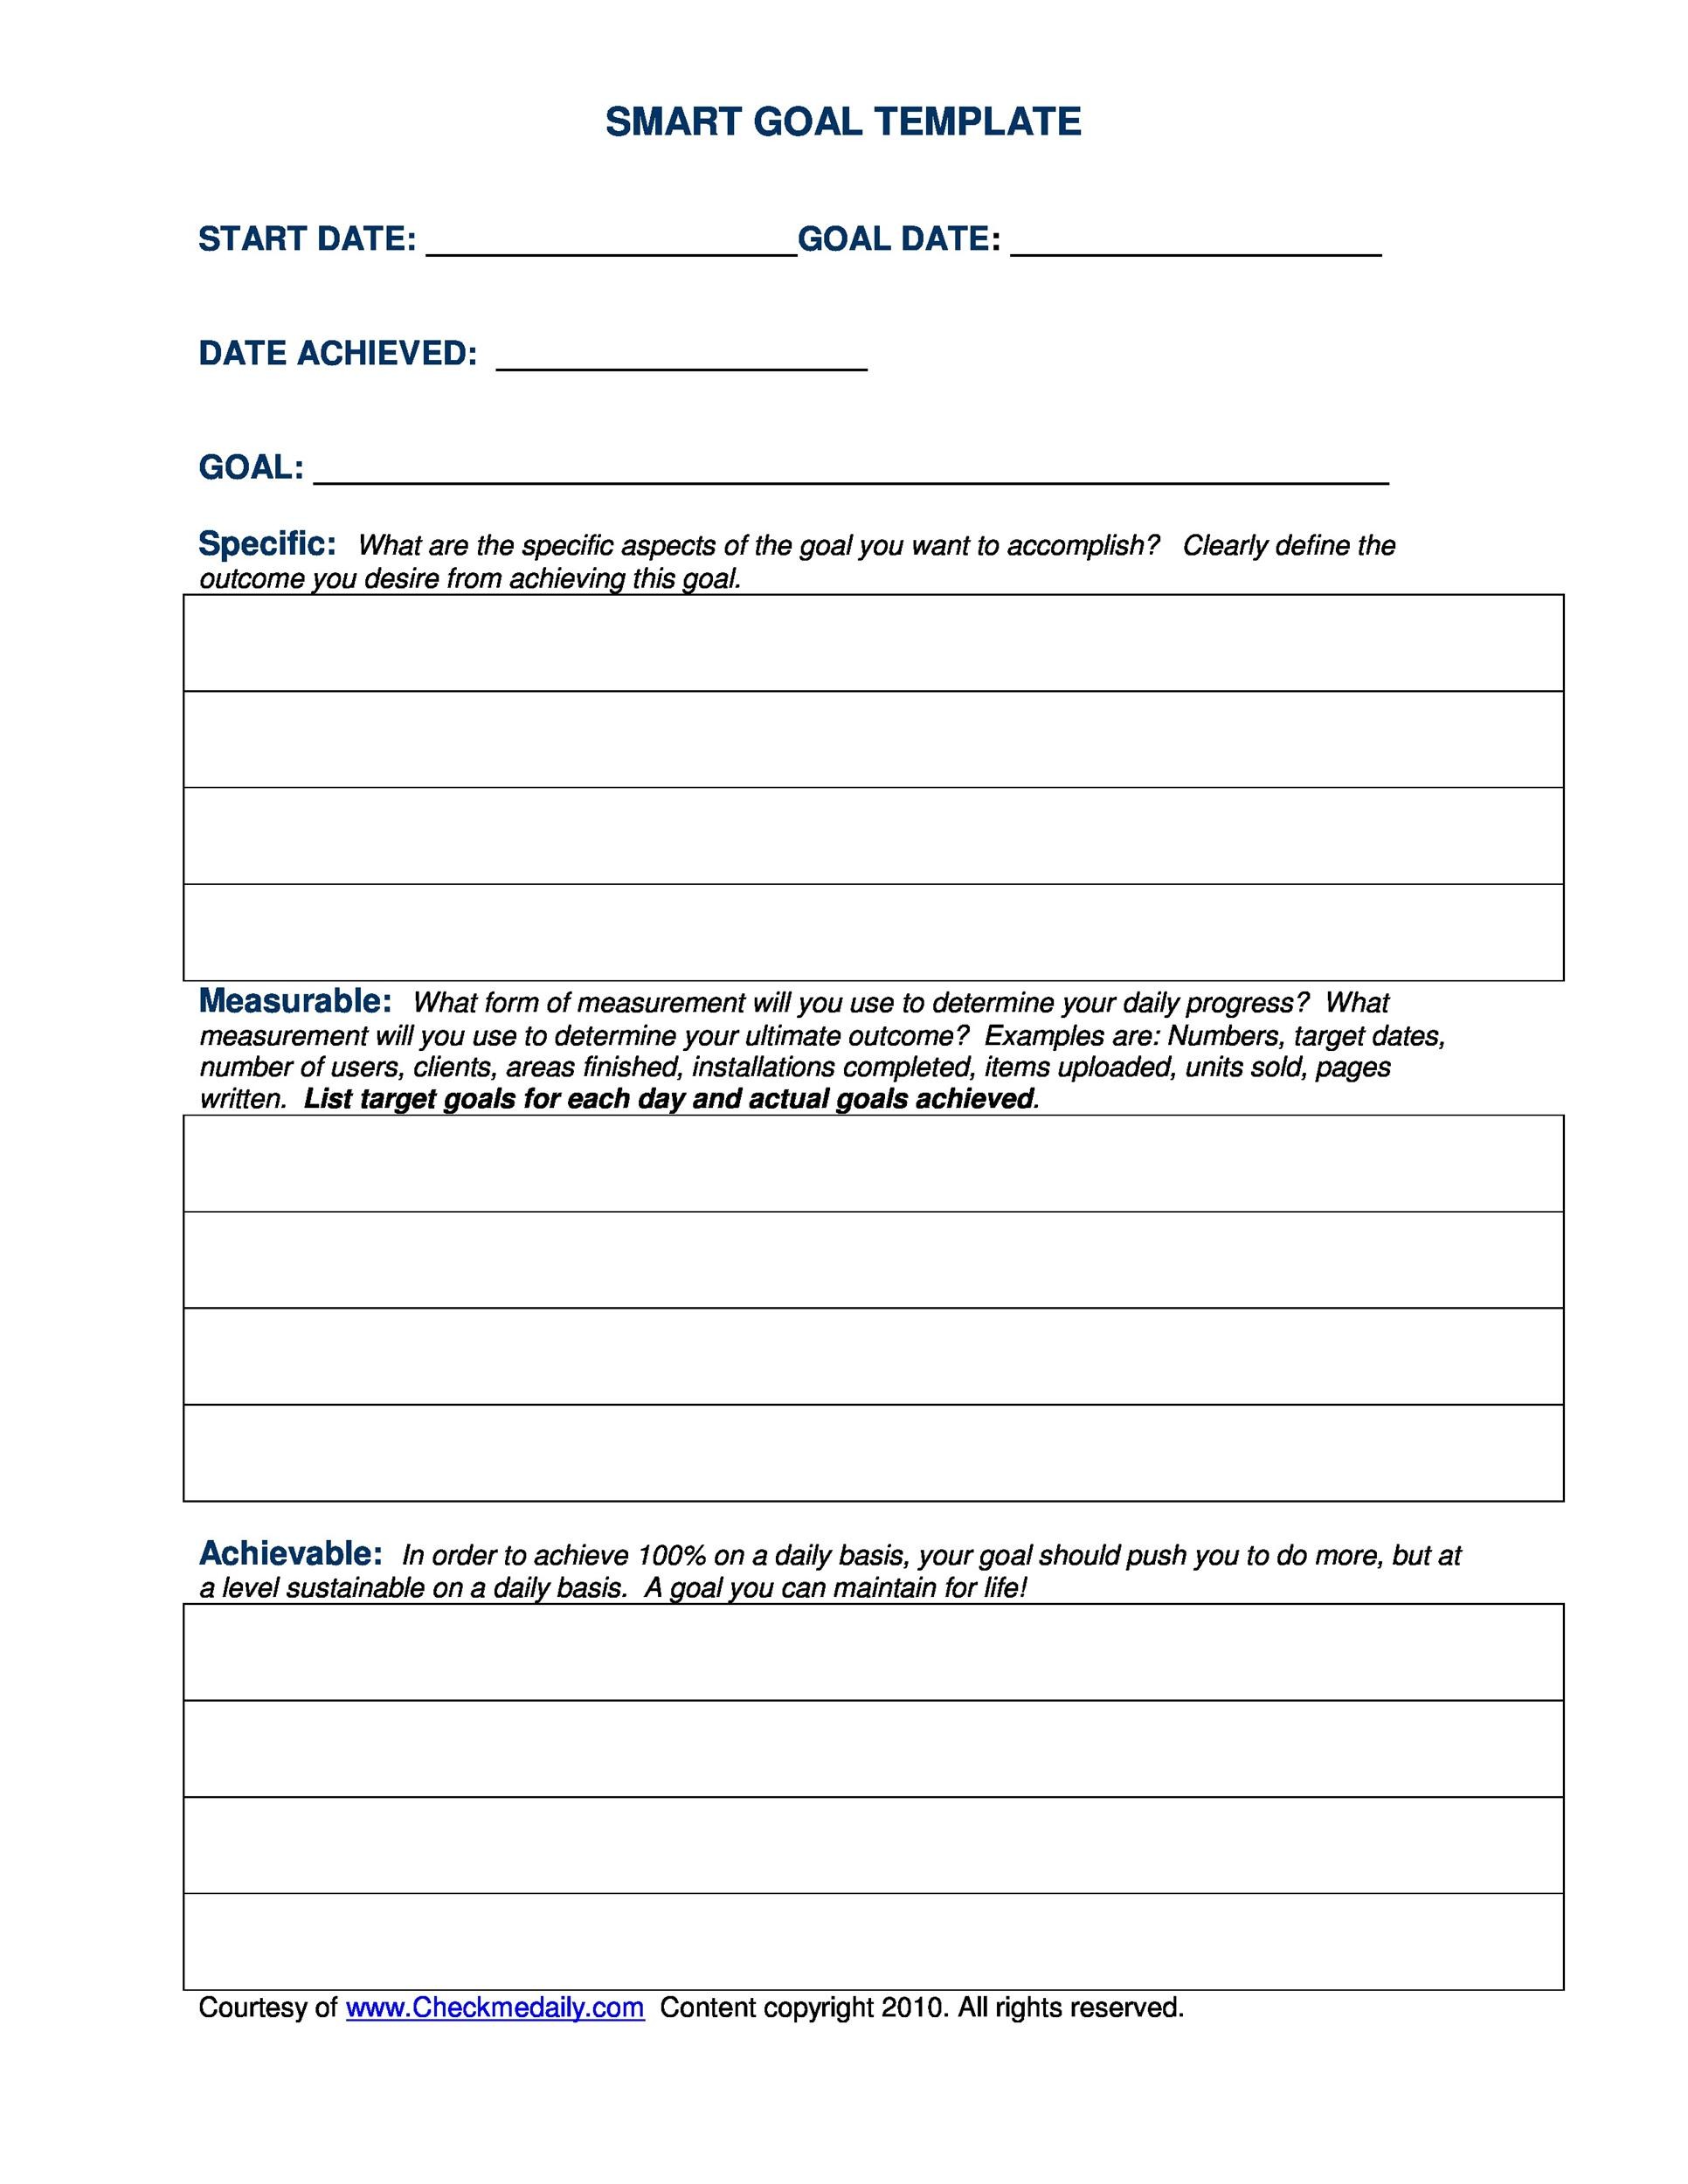 45-smart-goals-templates-examples-worksheets-templatelab